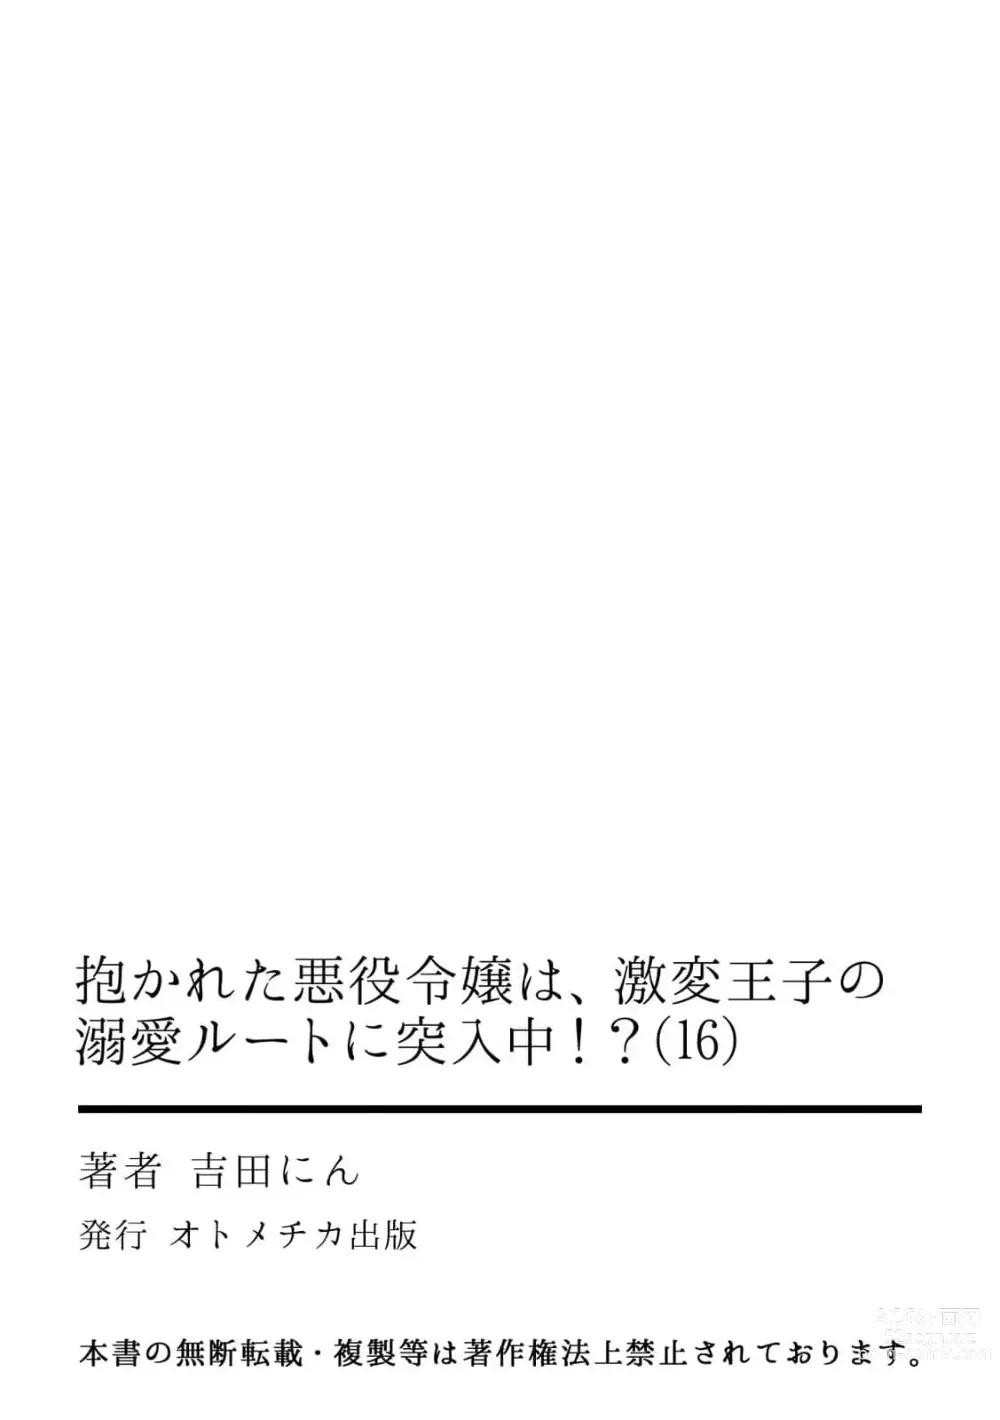 Page 420 of manga 被深拥的反派千金进入反套路王子的强宠攻略线!? 1-16